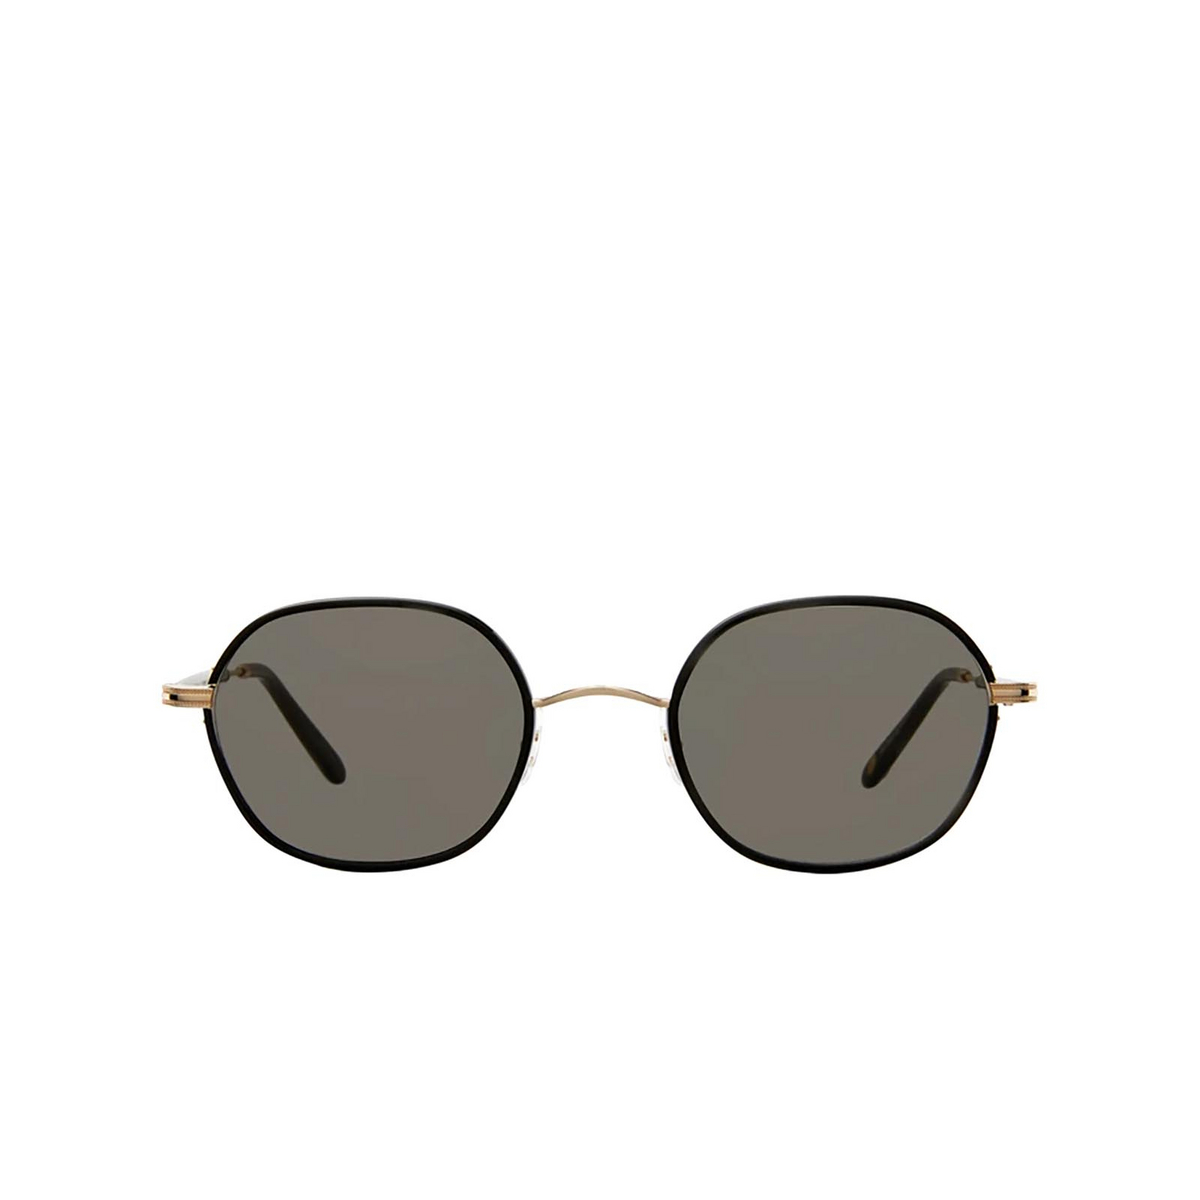 Garrett Leight® Irregular Sunglasses: Norfolk Sun color Black-gold Bk-g/gry - front view.